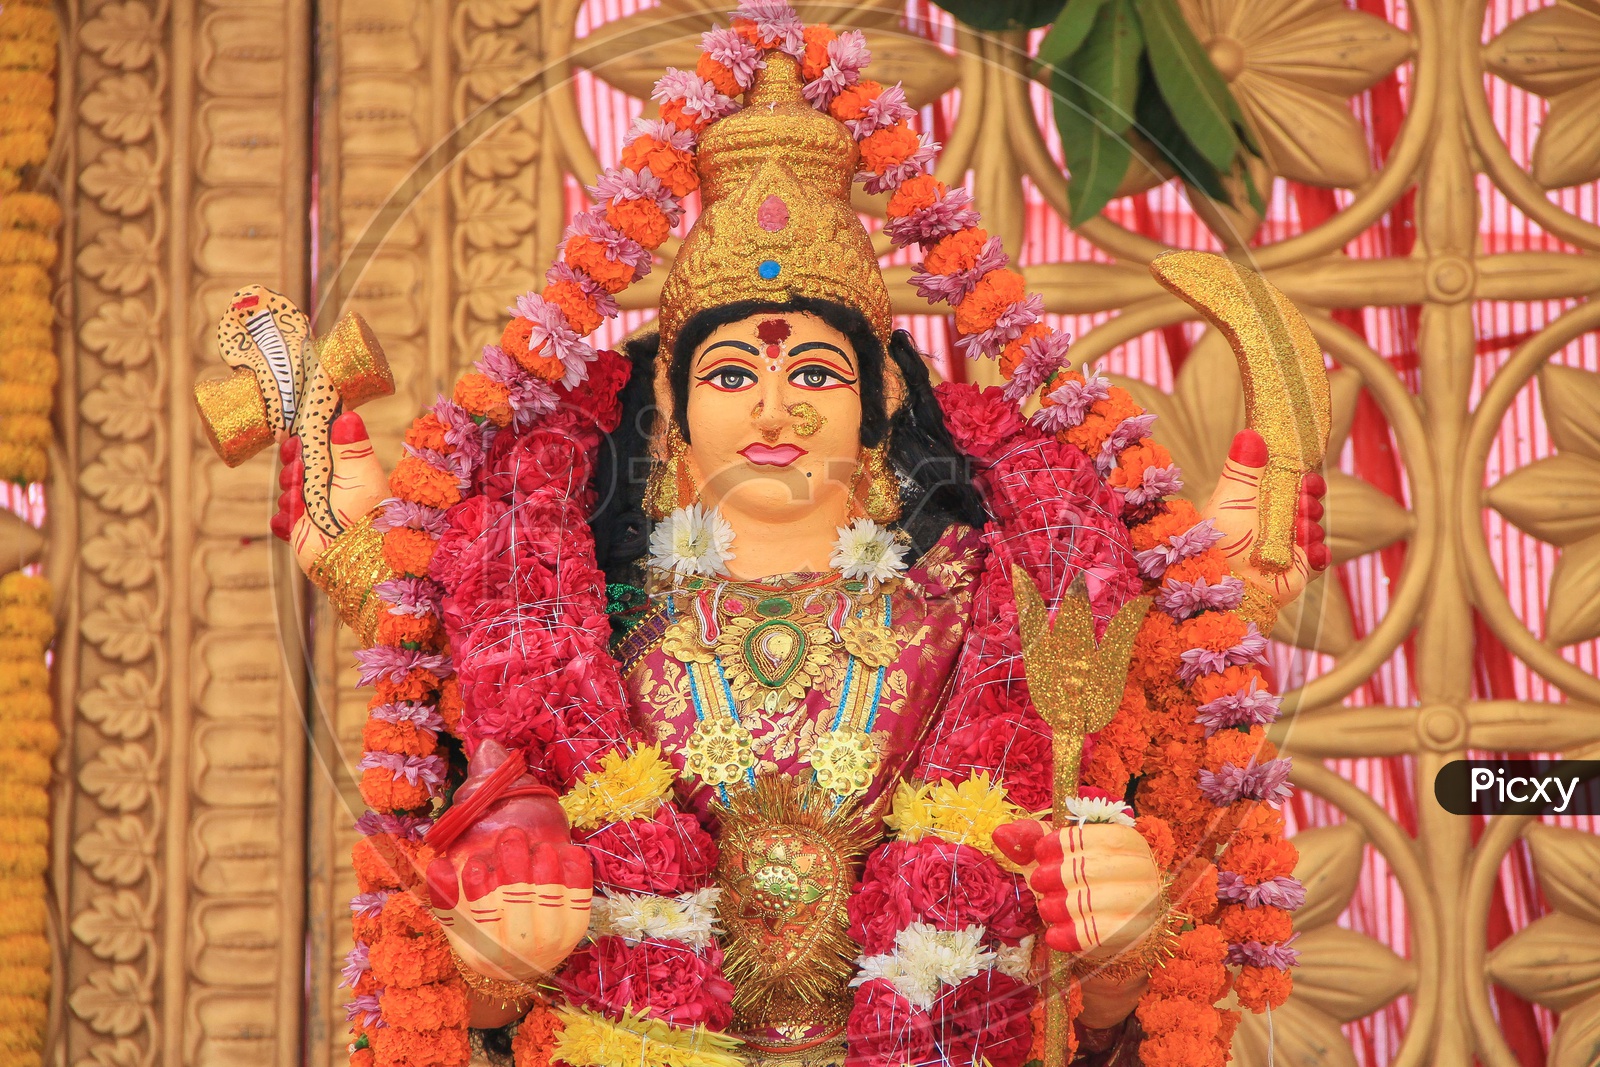 A statue of a Hindu Goddess Idol